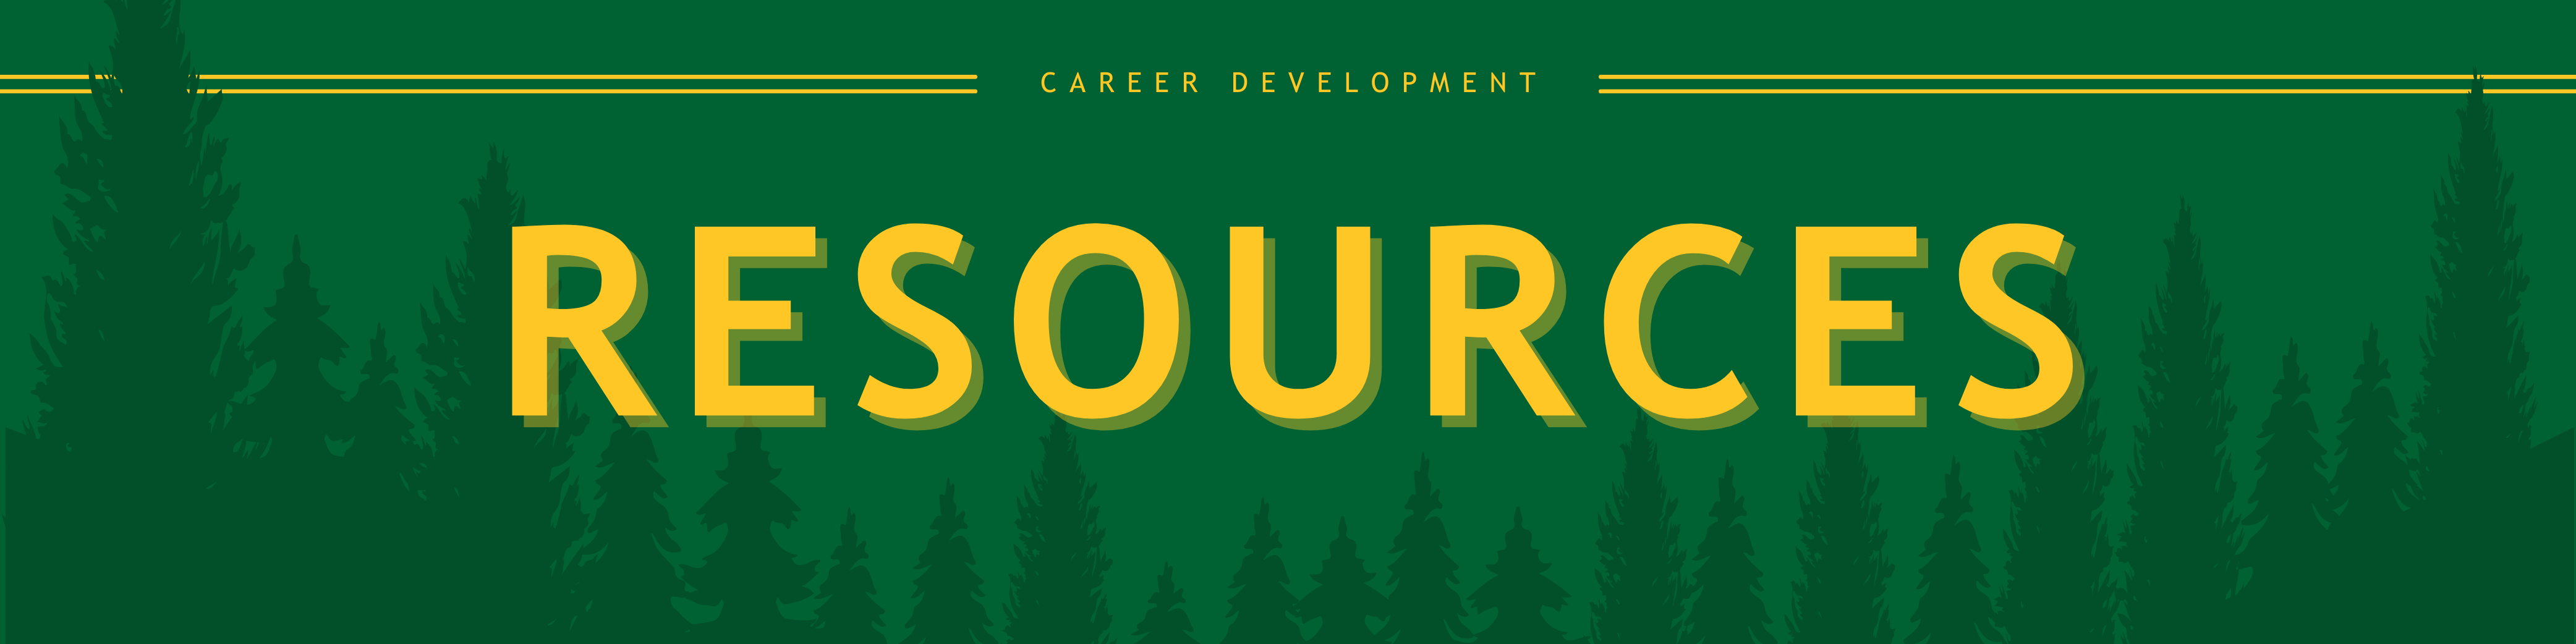 Career Development Resources Banner